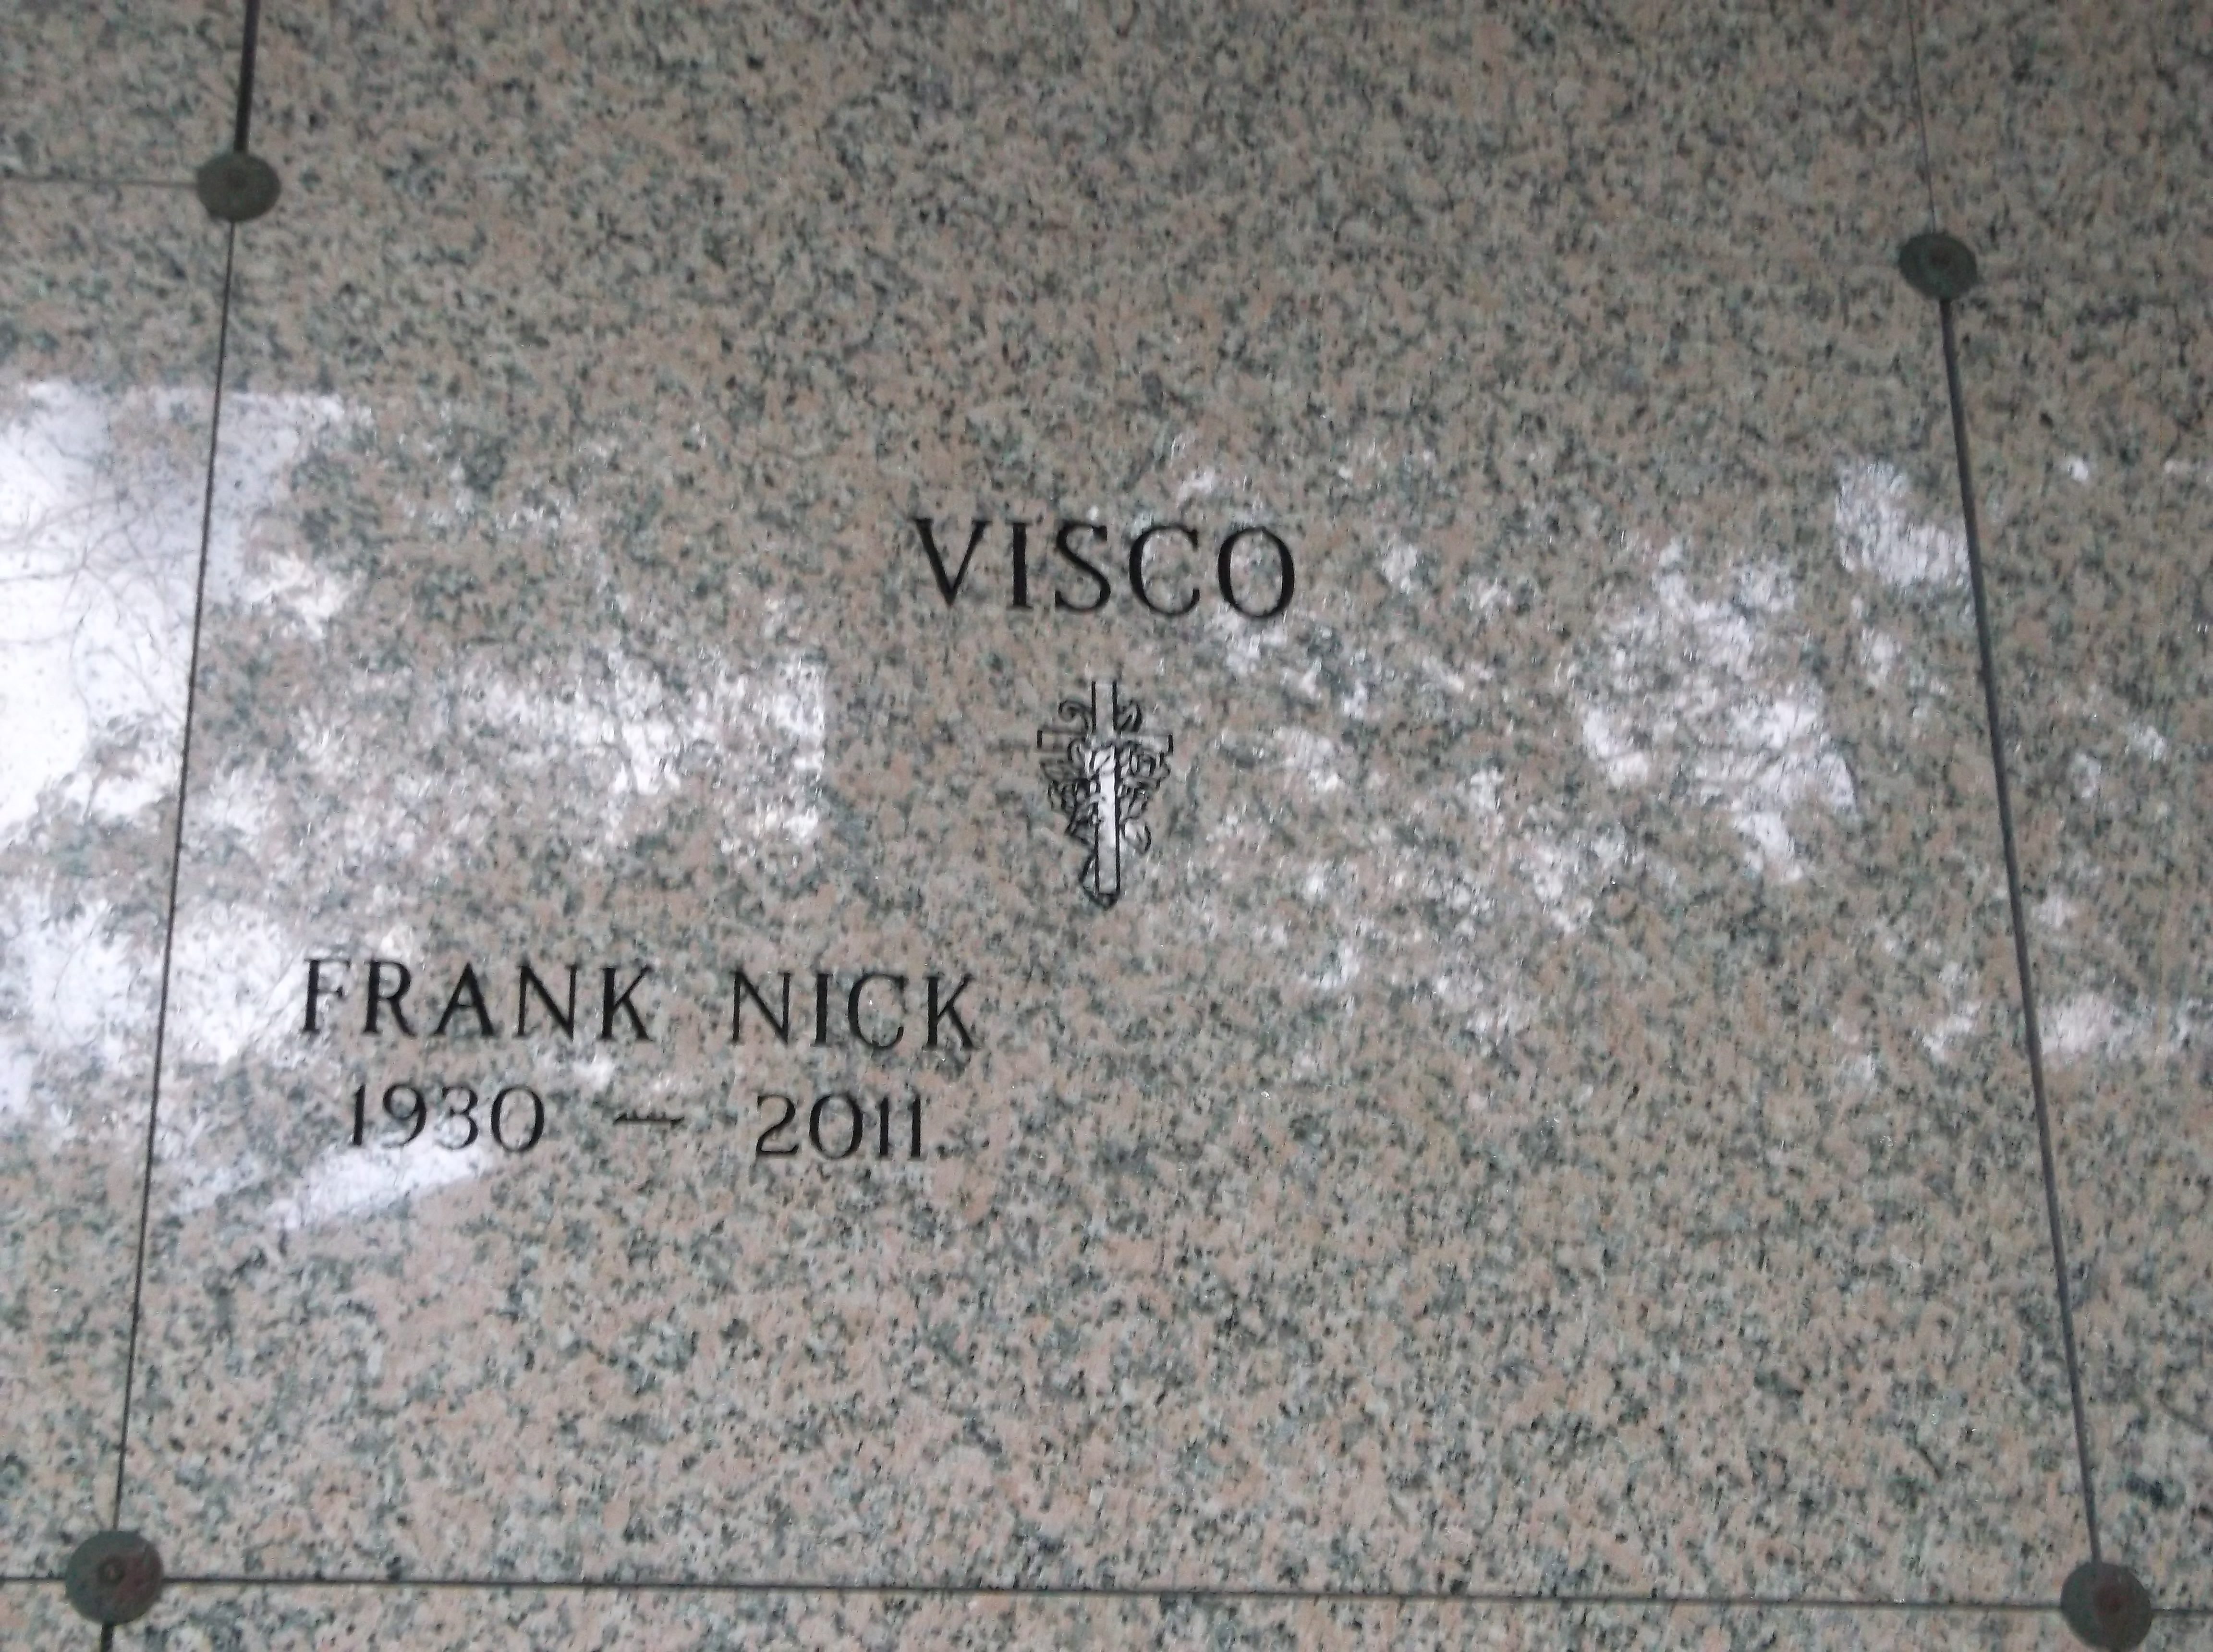 Frank Nick Visco